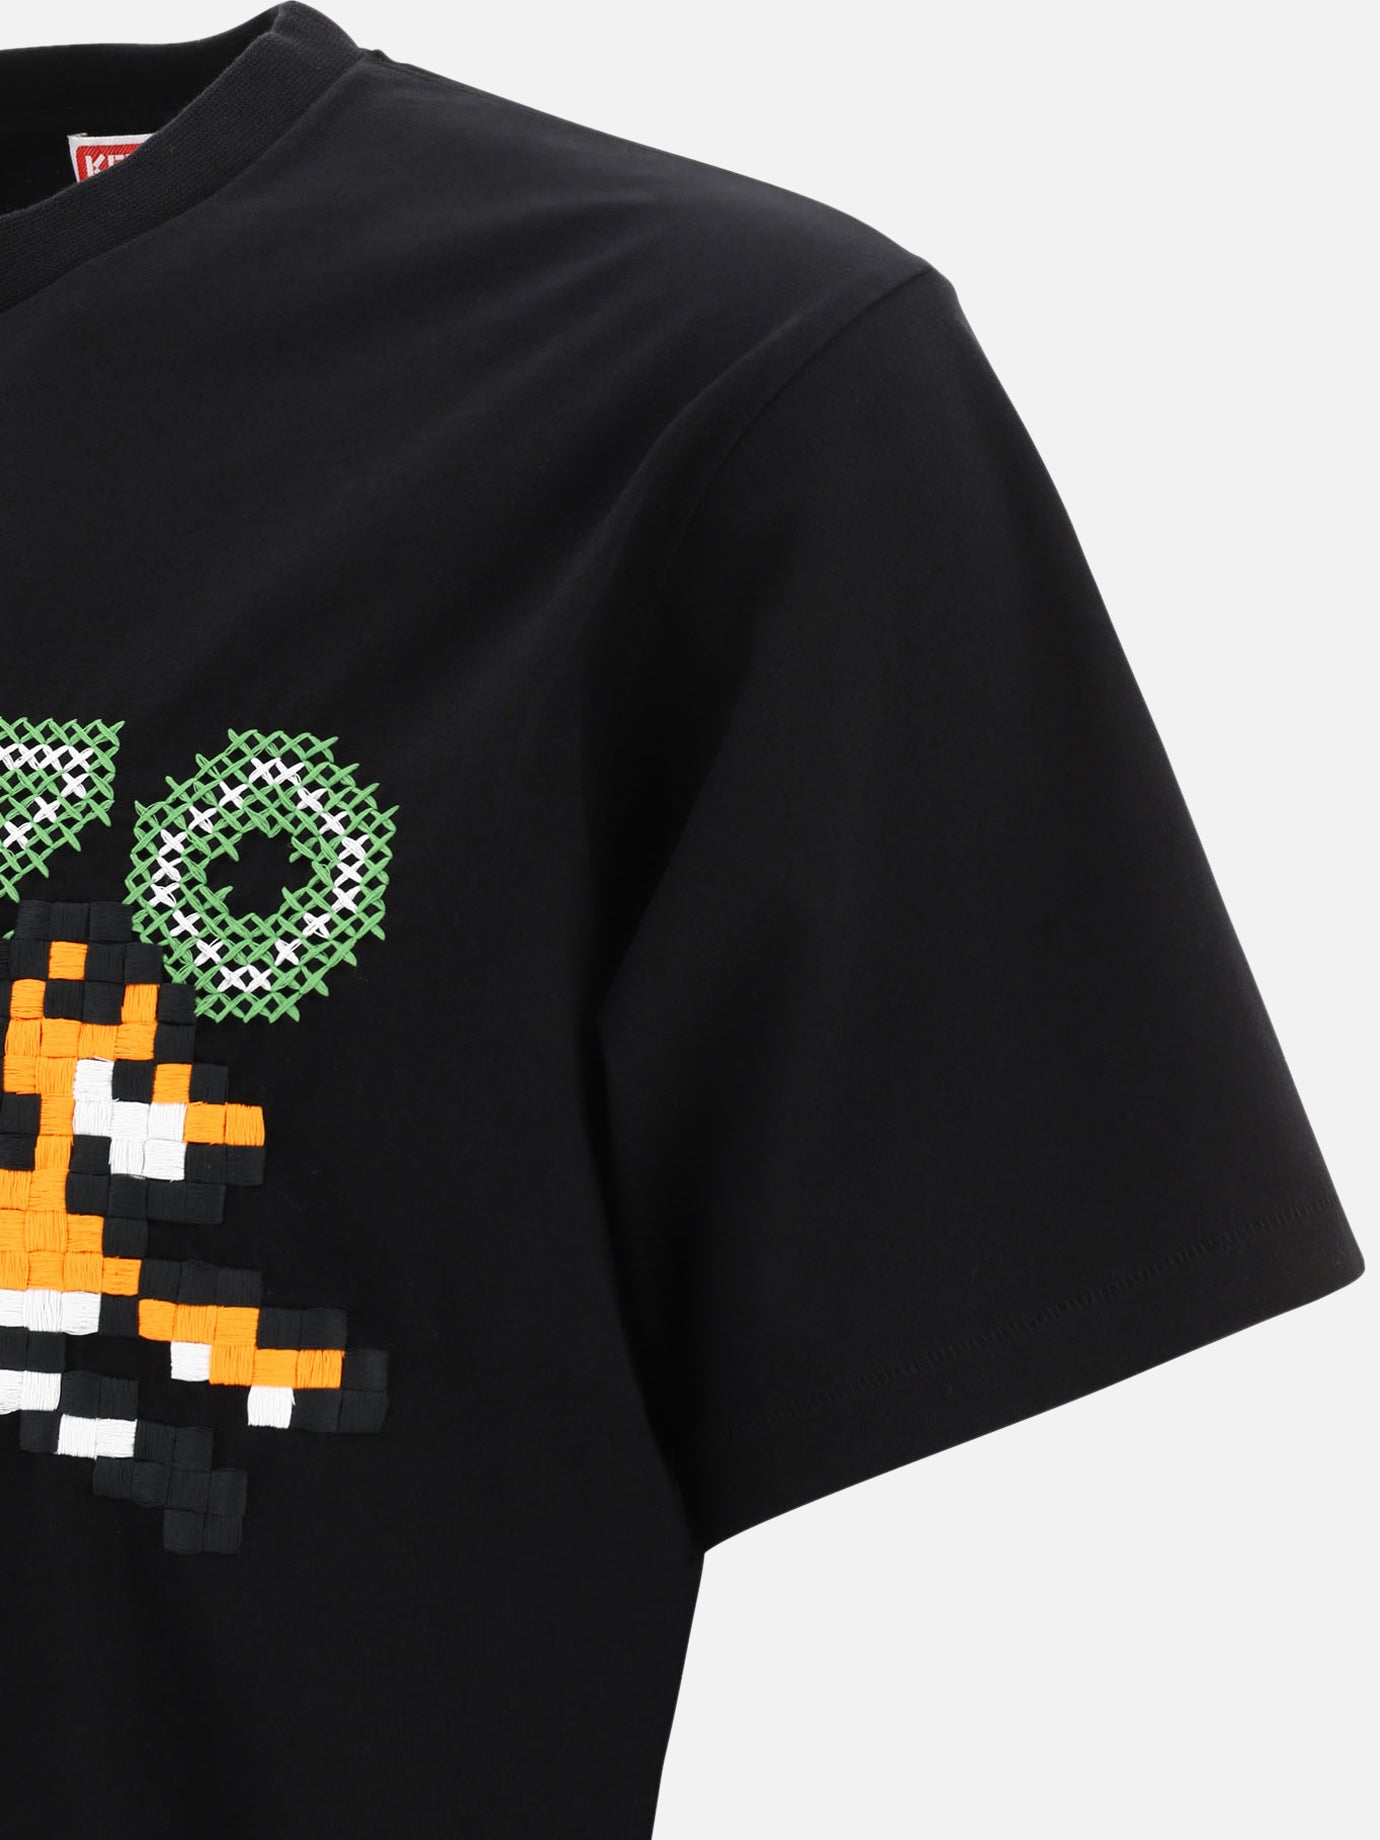 "Pixel" t-shirt